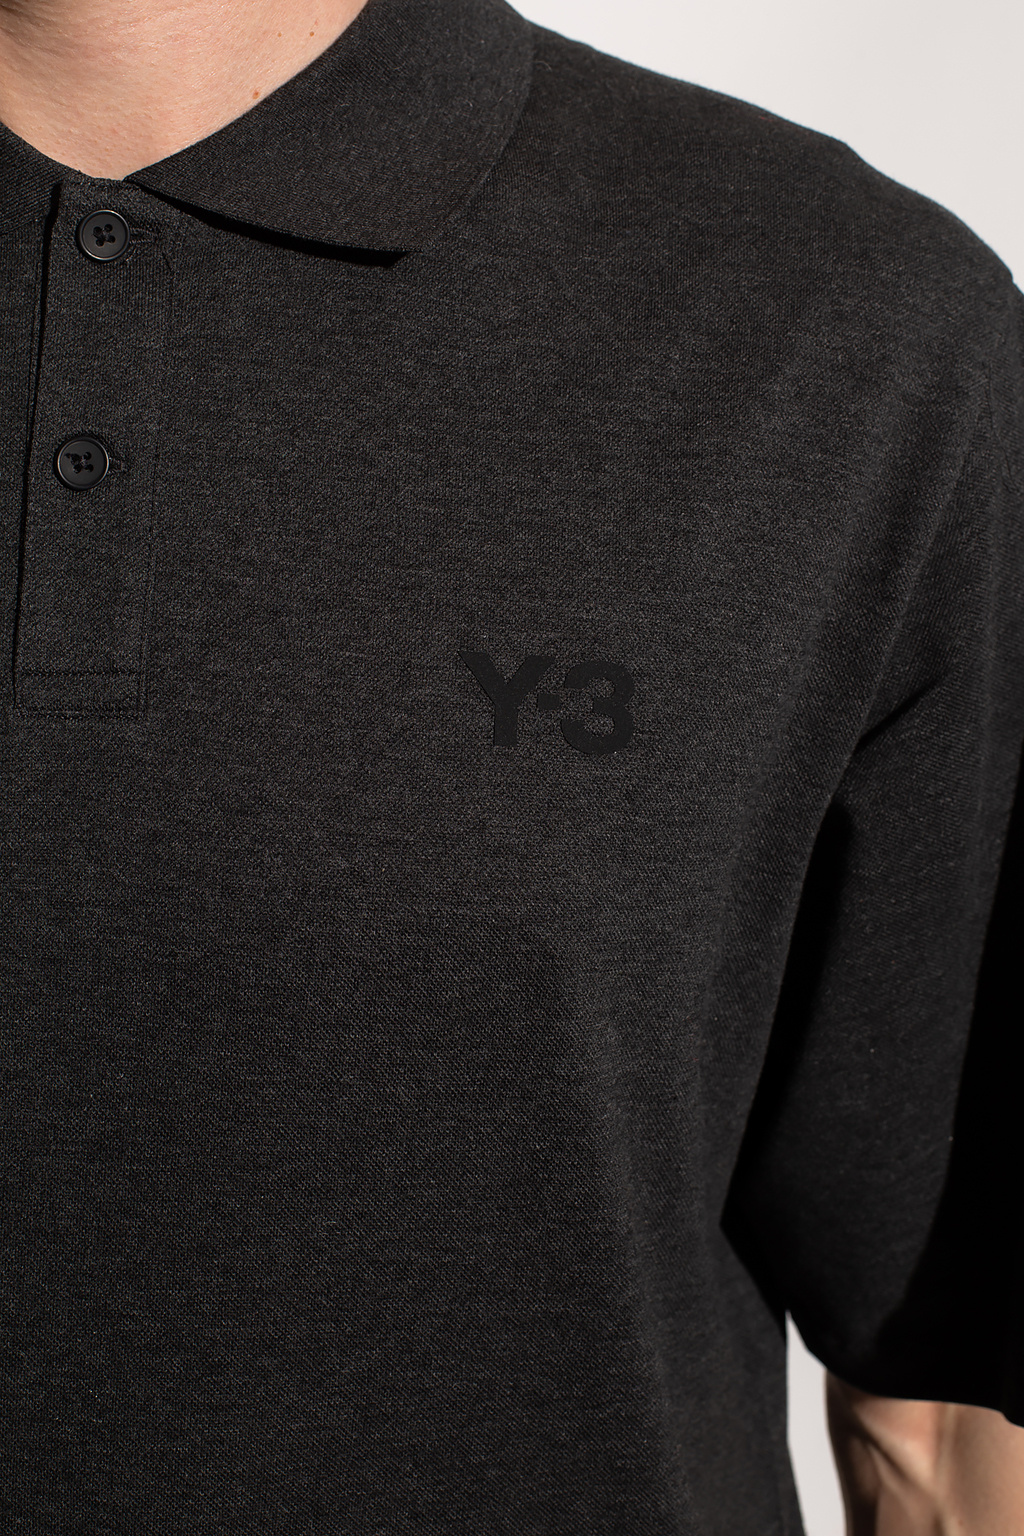 Y-3 Yohji Yamamoto Polo shirt with logo